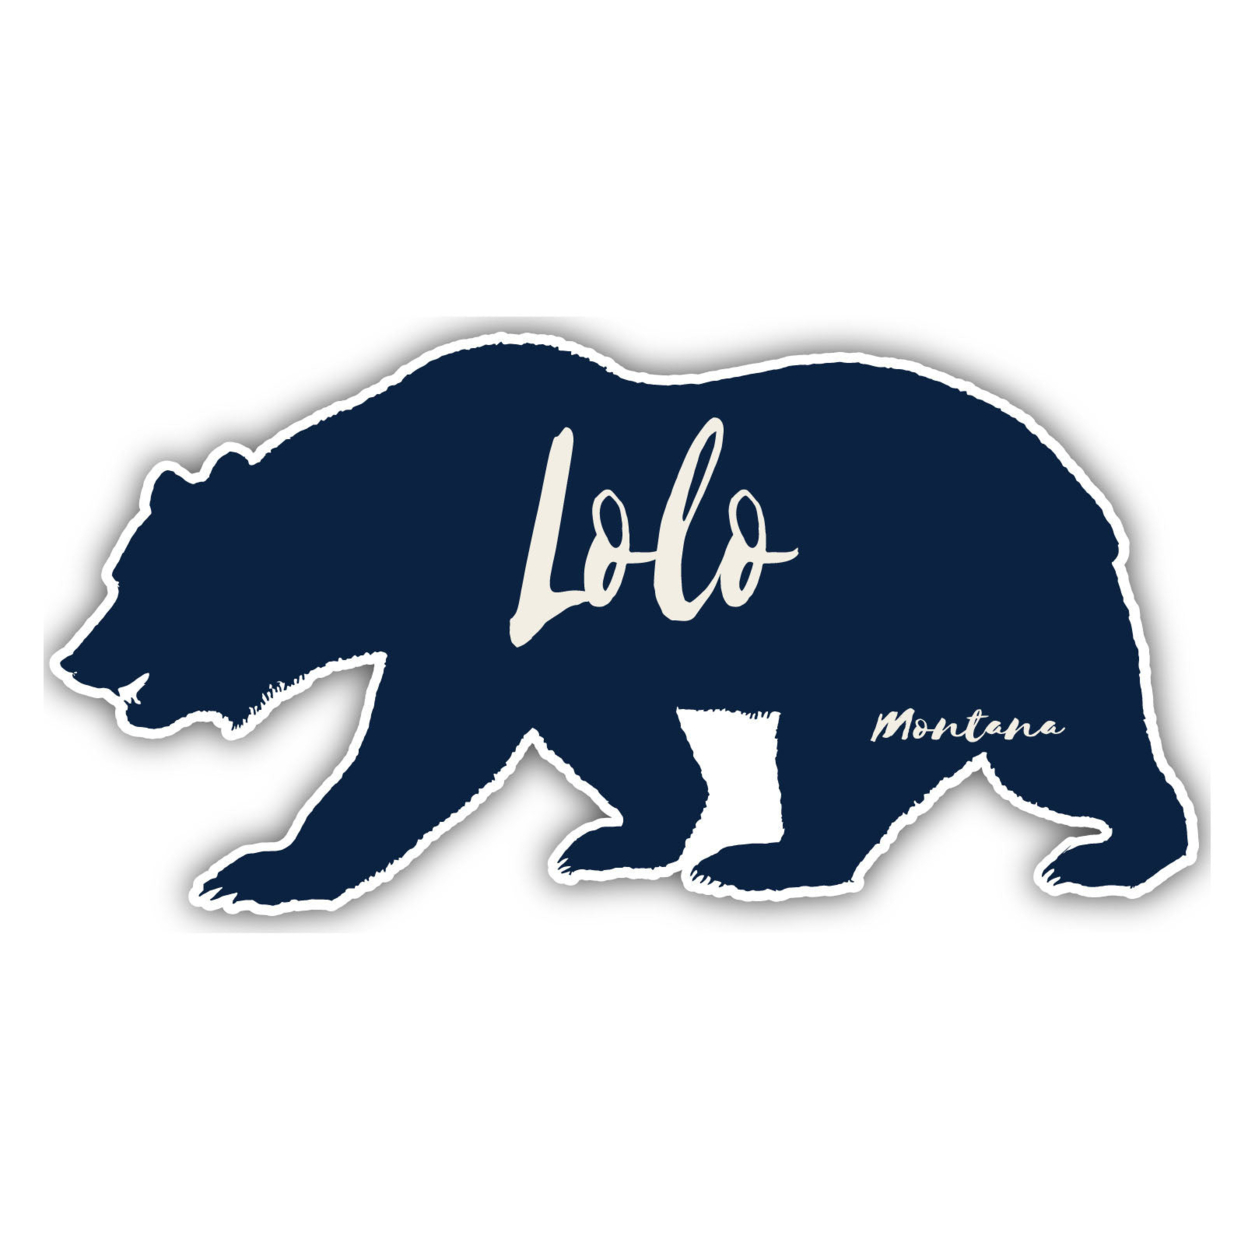 Lolo Montana Souvenir Decorative Stickers (Choose Theme And Size) - 4-Inch, Bear